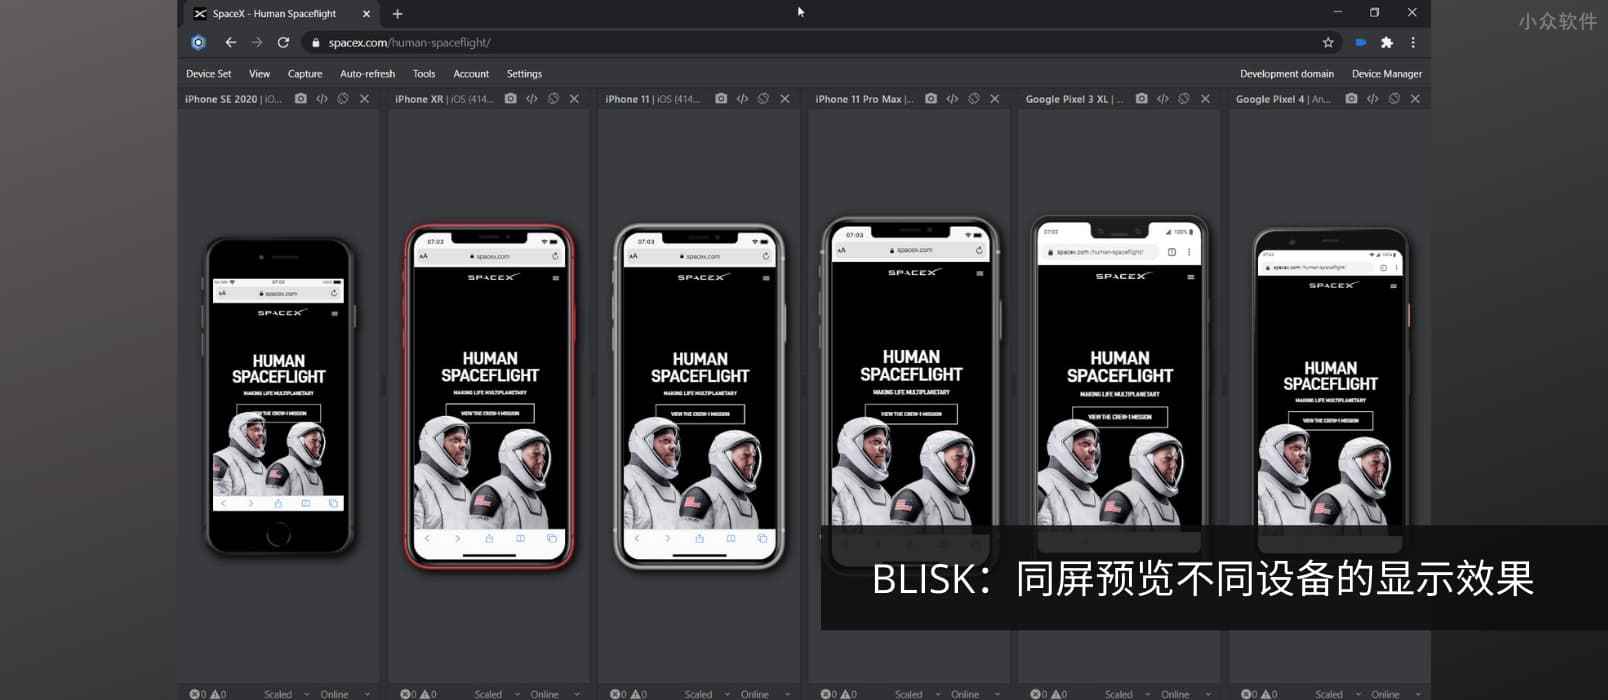 BLISK - 专为 UI 设计师的浏览器，同屏同步预览不同设备的显示效果，支持 50+ 款设备